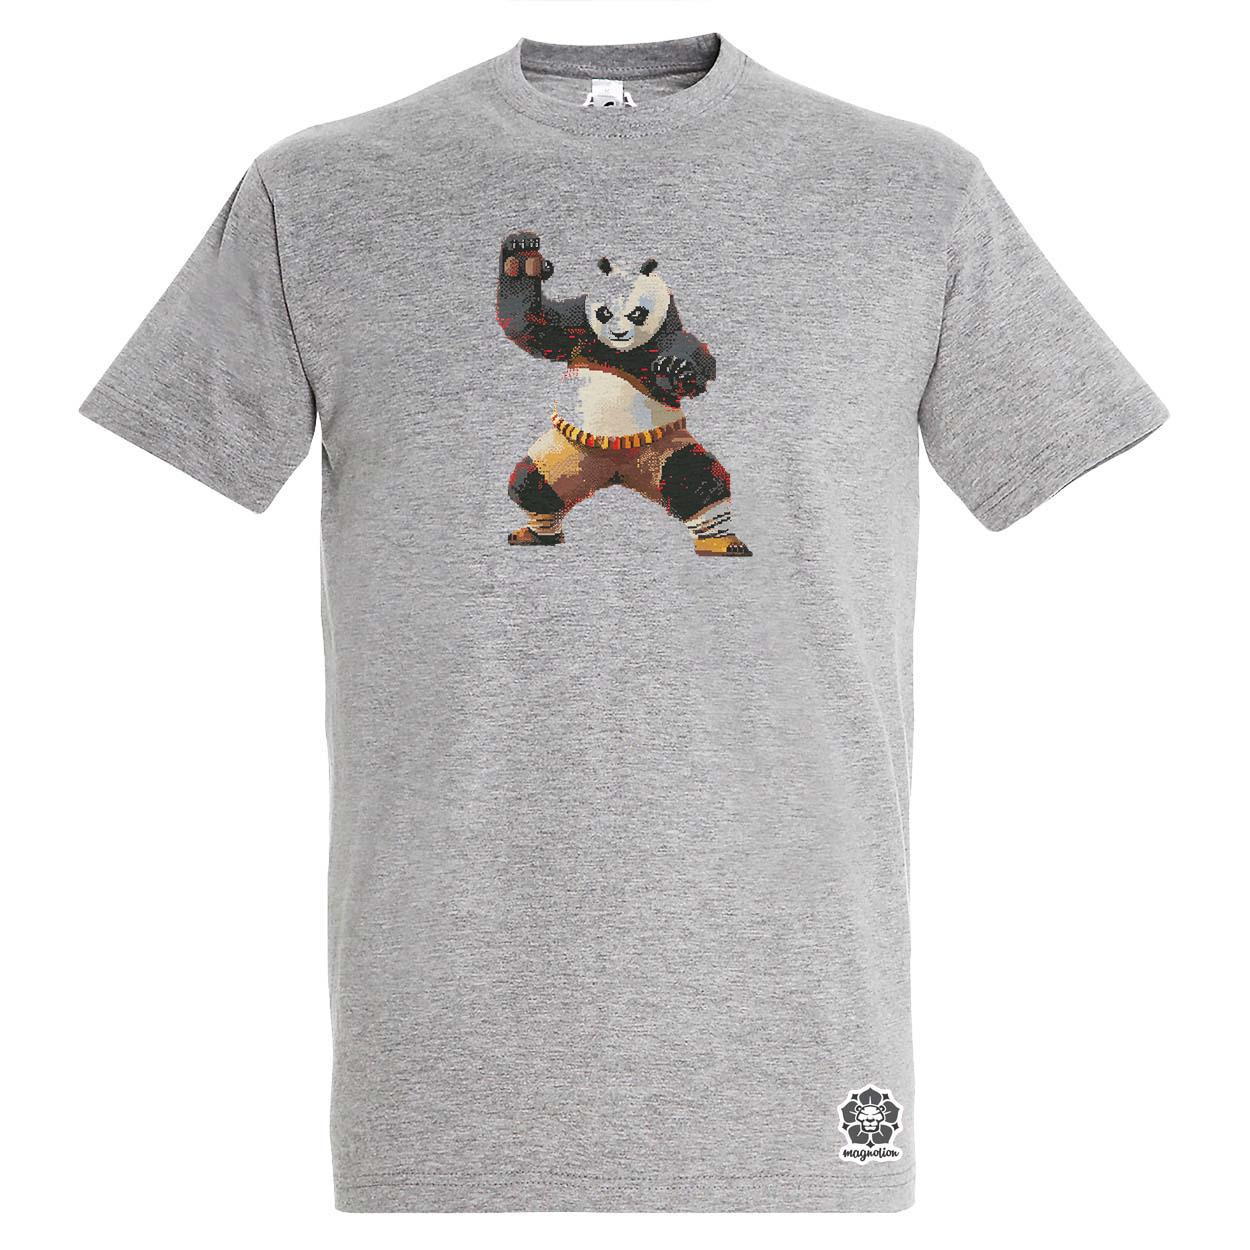 Pixelart kung fu panda v2